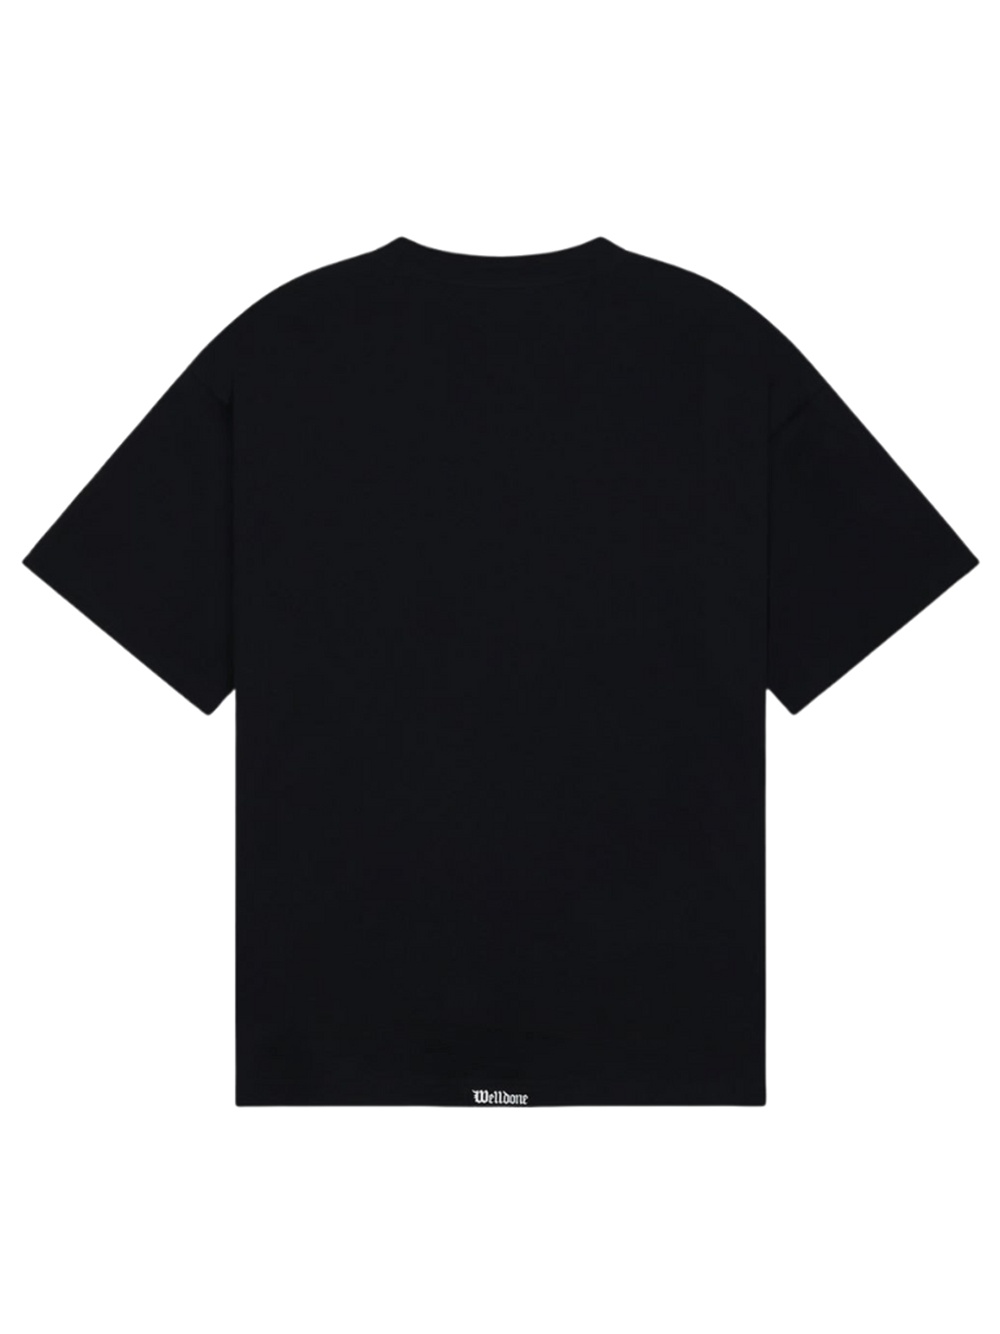 Black Gothic Logo Print T-Shirt - 2